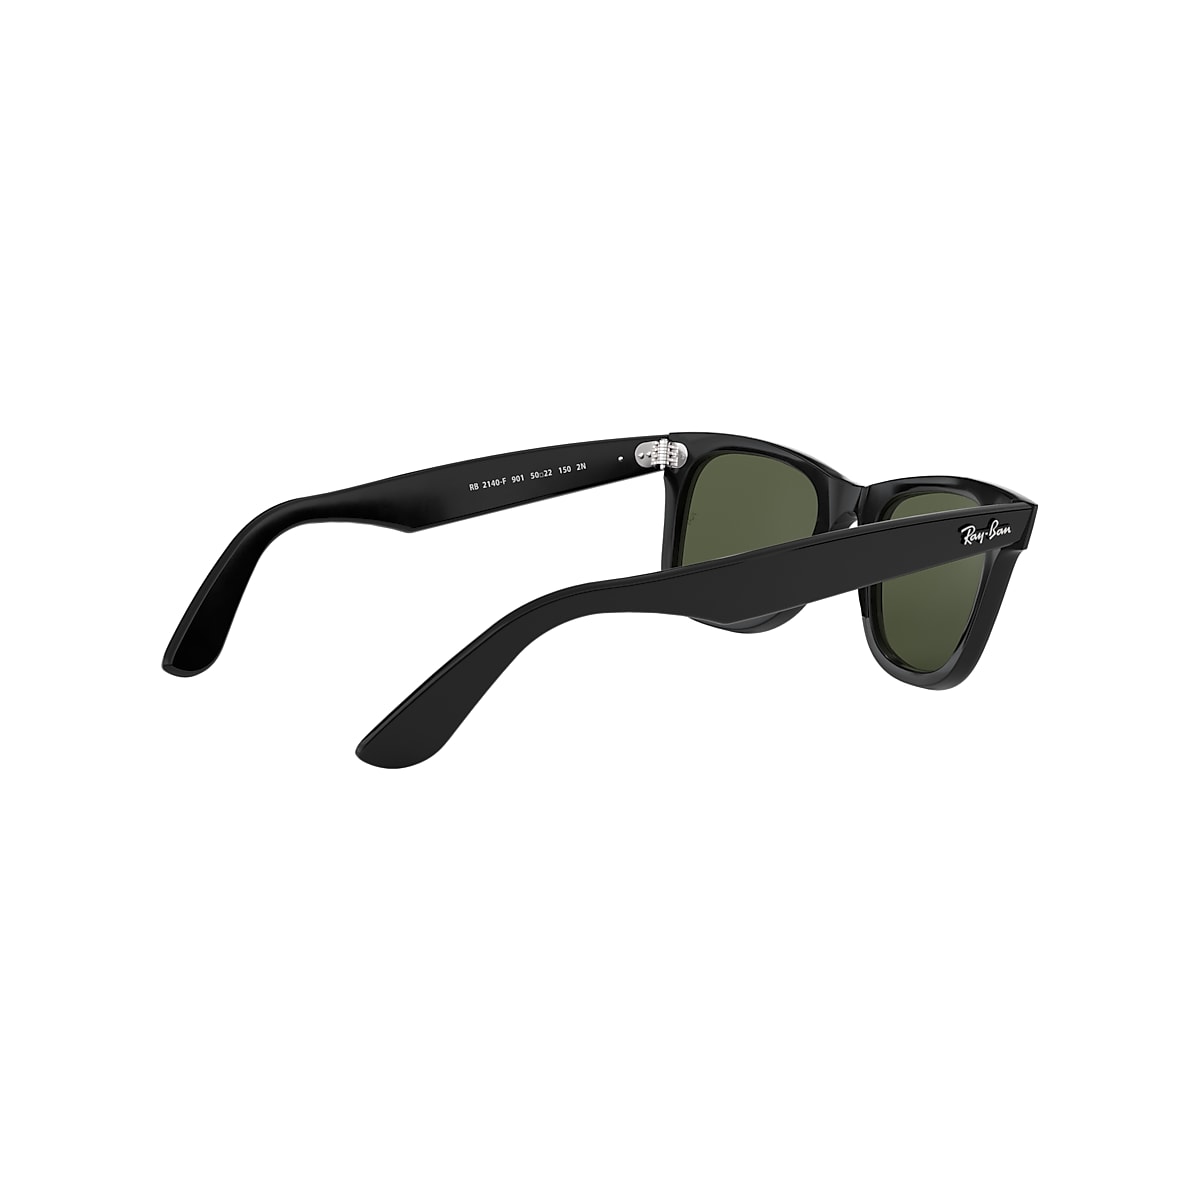 Ray-Ban Original Wayfarer Classic Sunglasses Black Frame Green Lenses 52-22